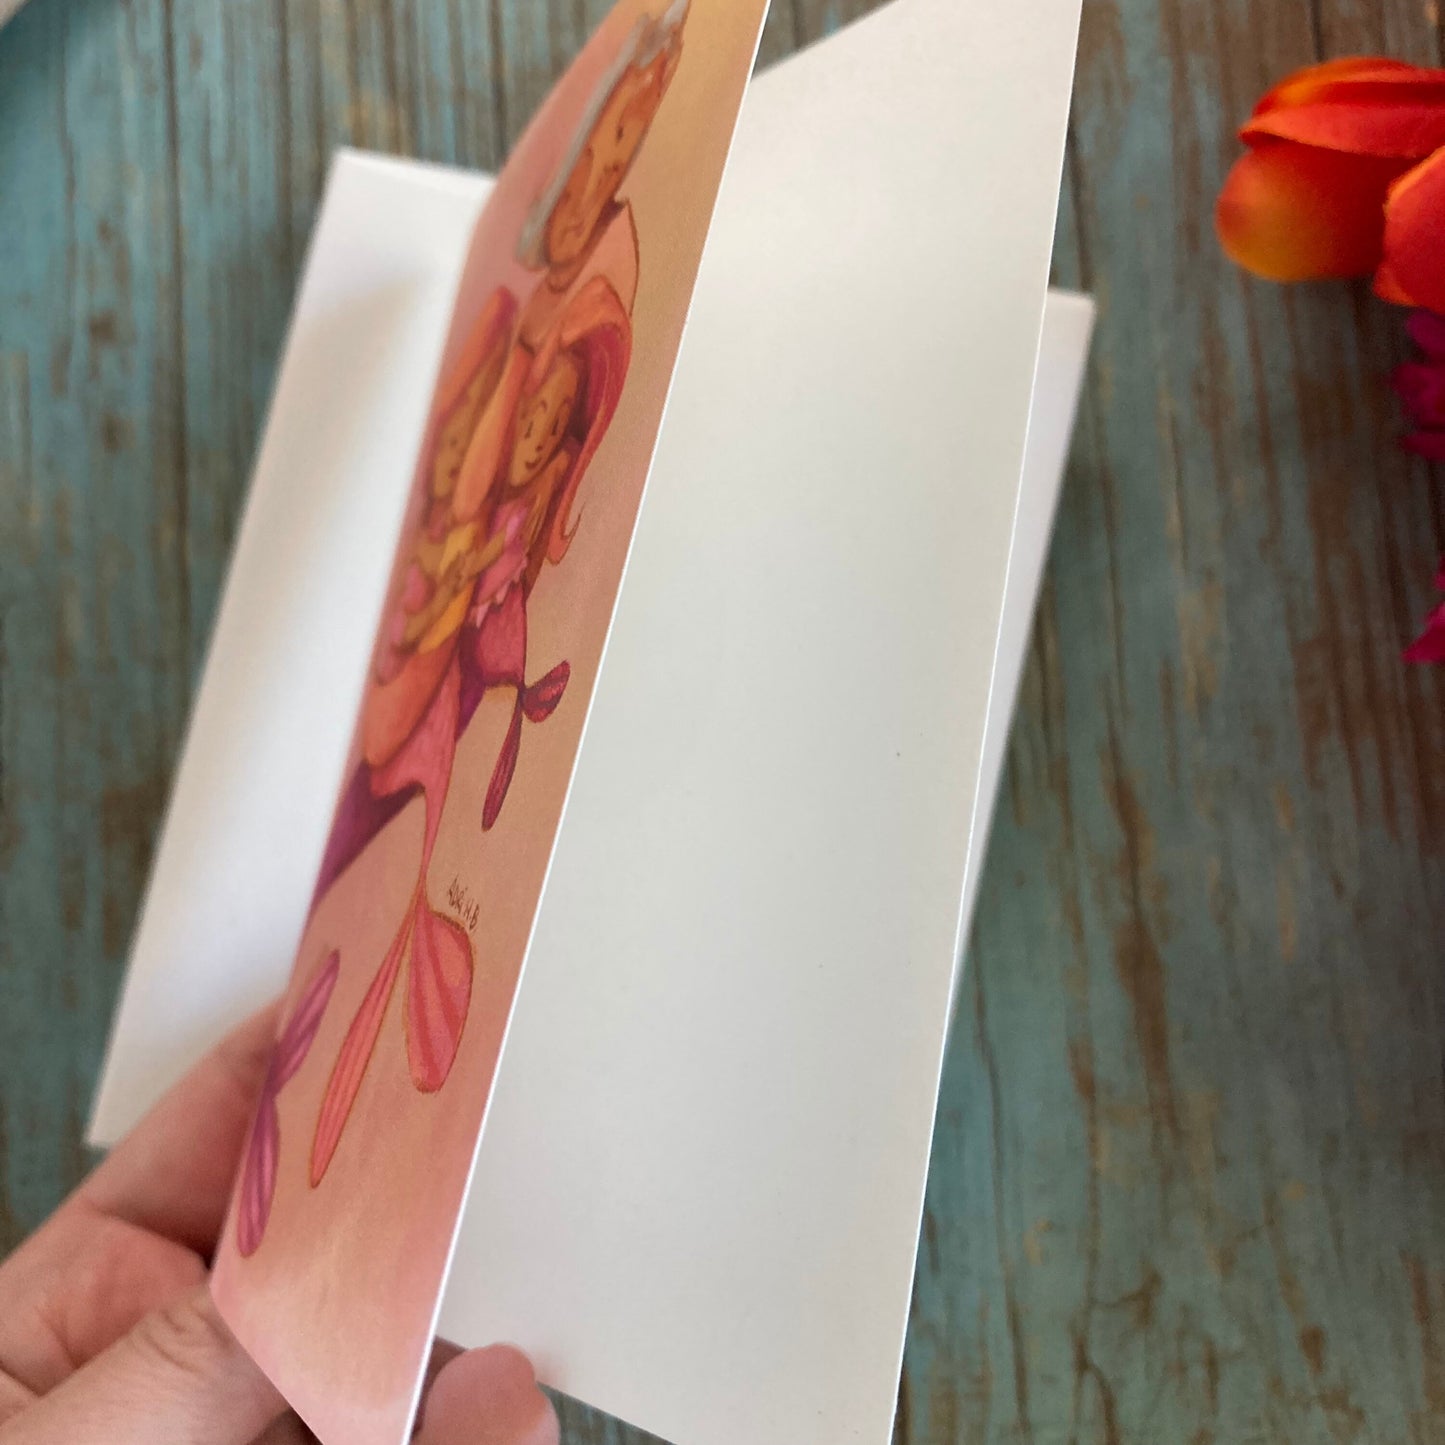 LOVE - Mermaid Family - Greeting Card for Mom, Sister, Grandma, Friends, eco-friendly notecards by Adriana Bergstrom (Adriprints)